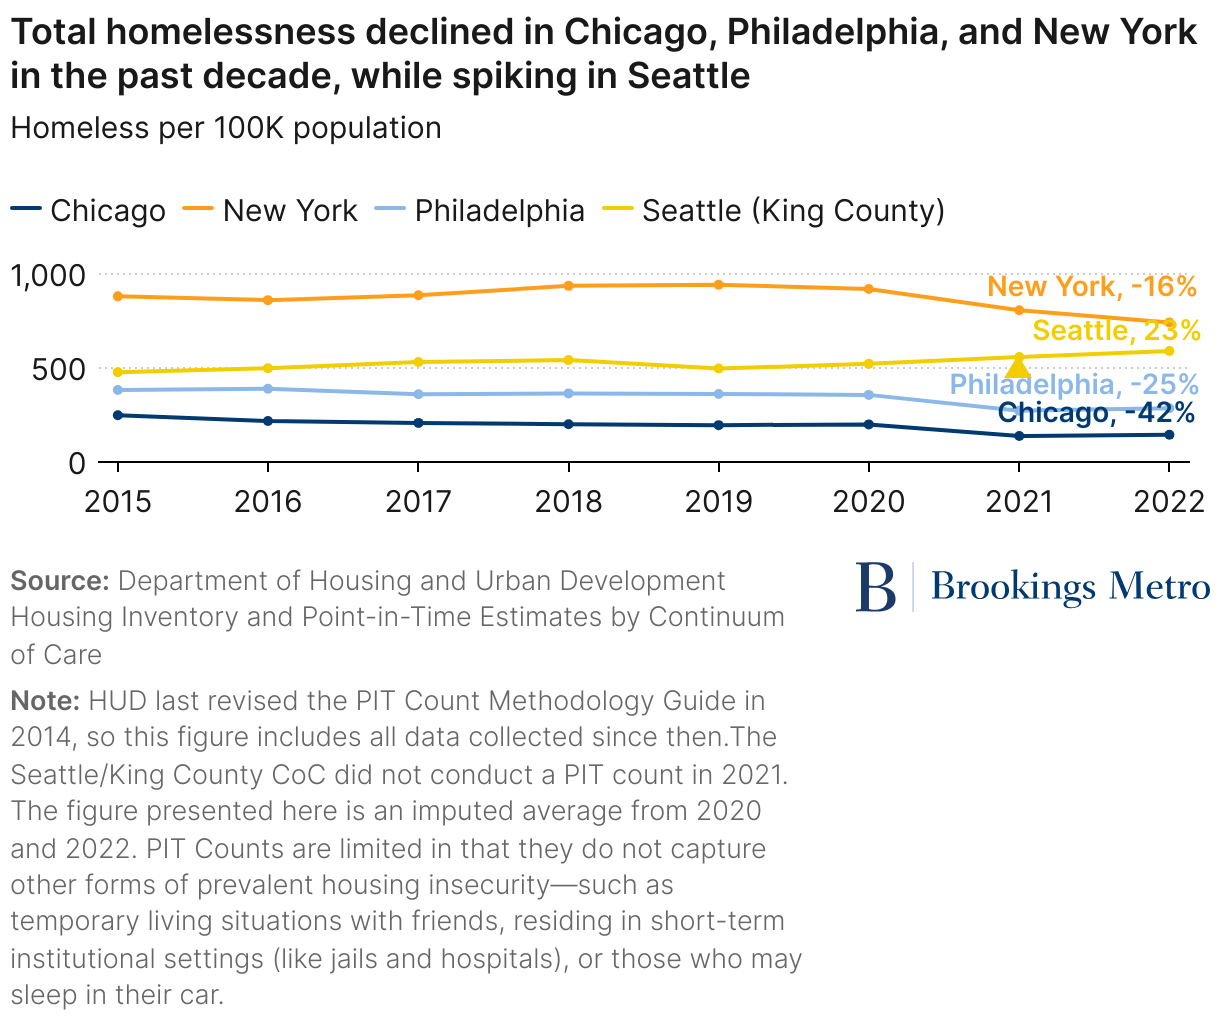 essay on homelessness in america